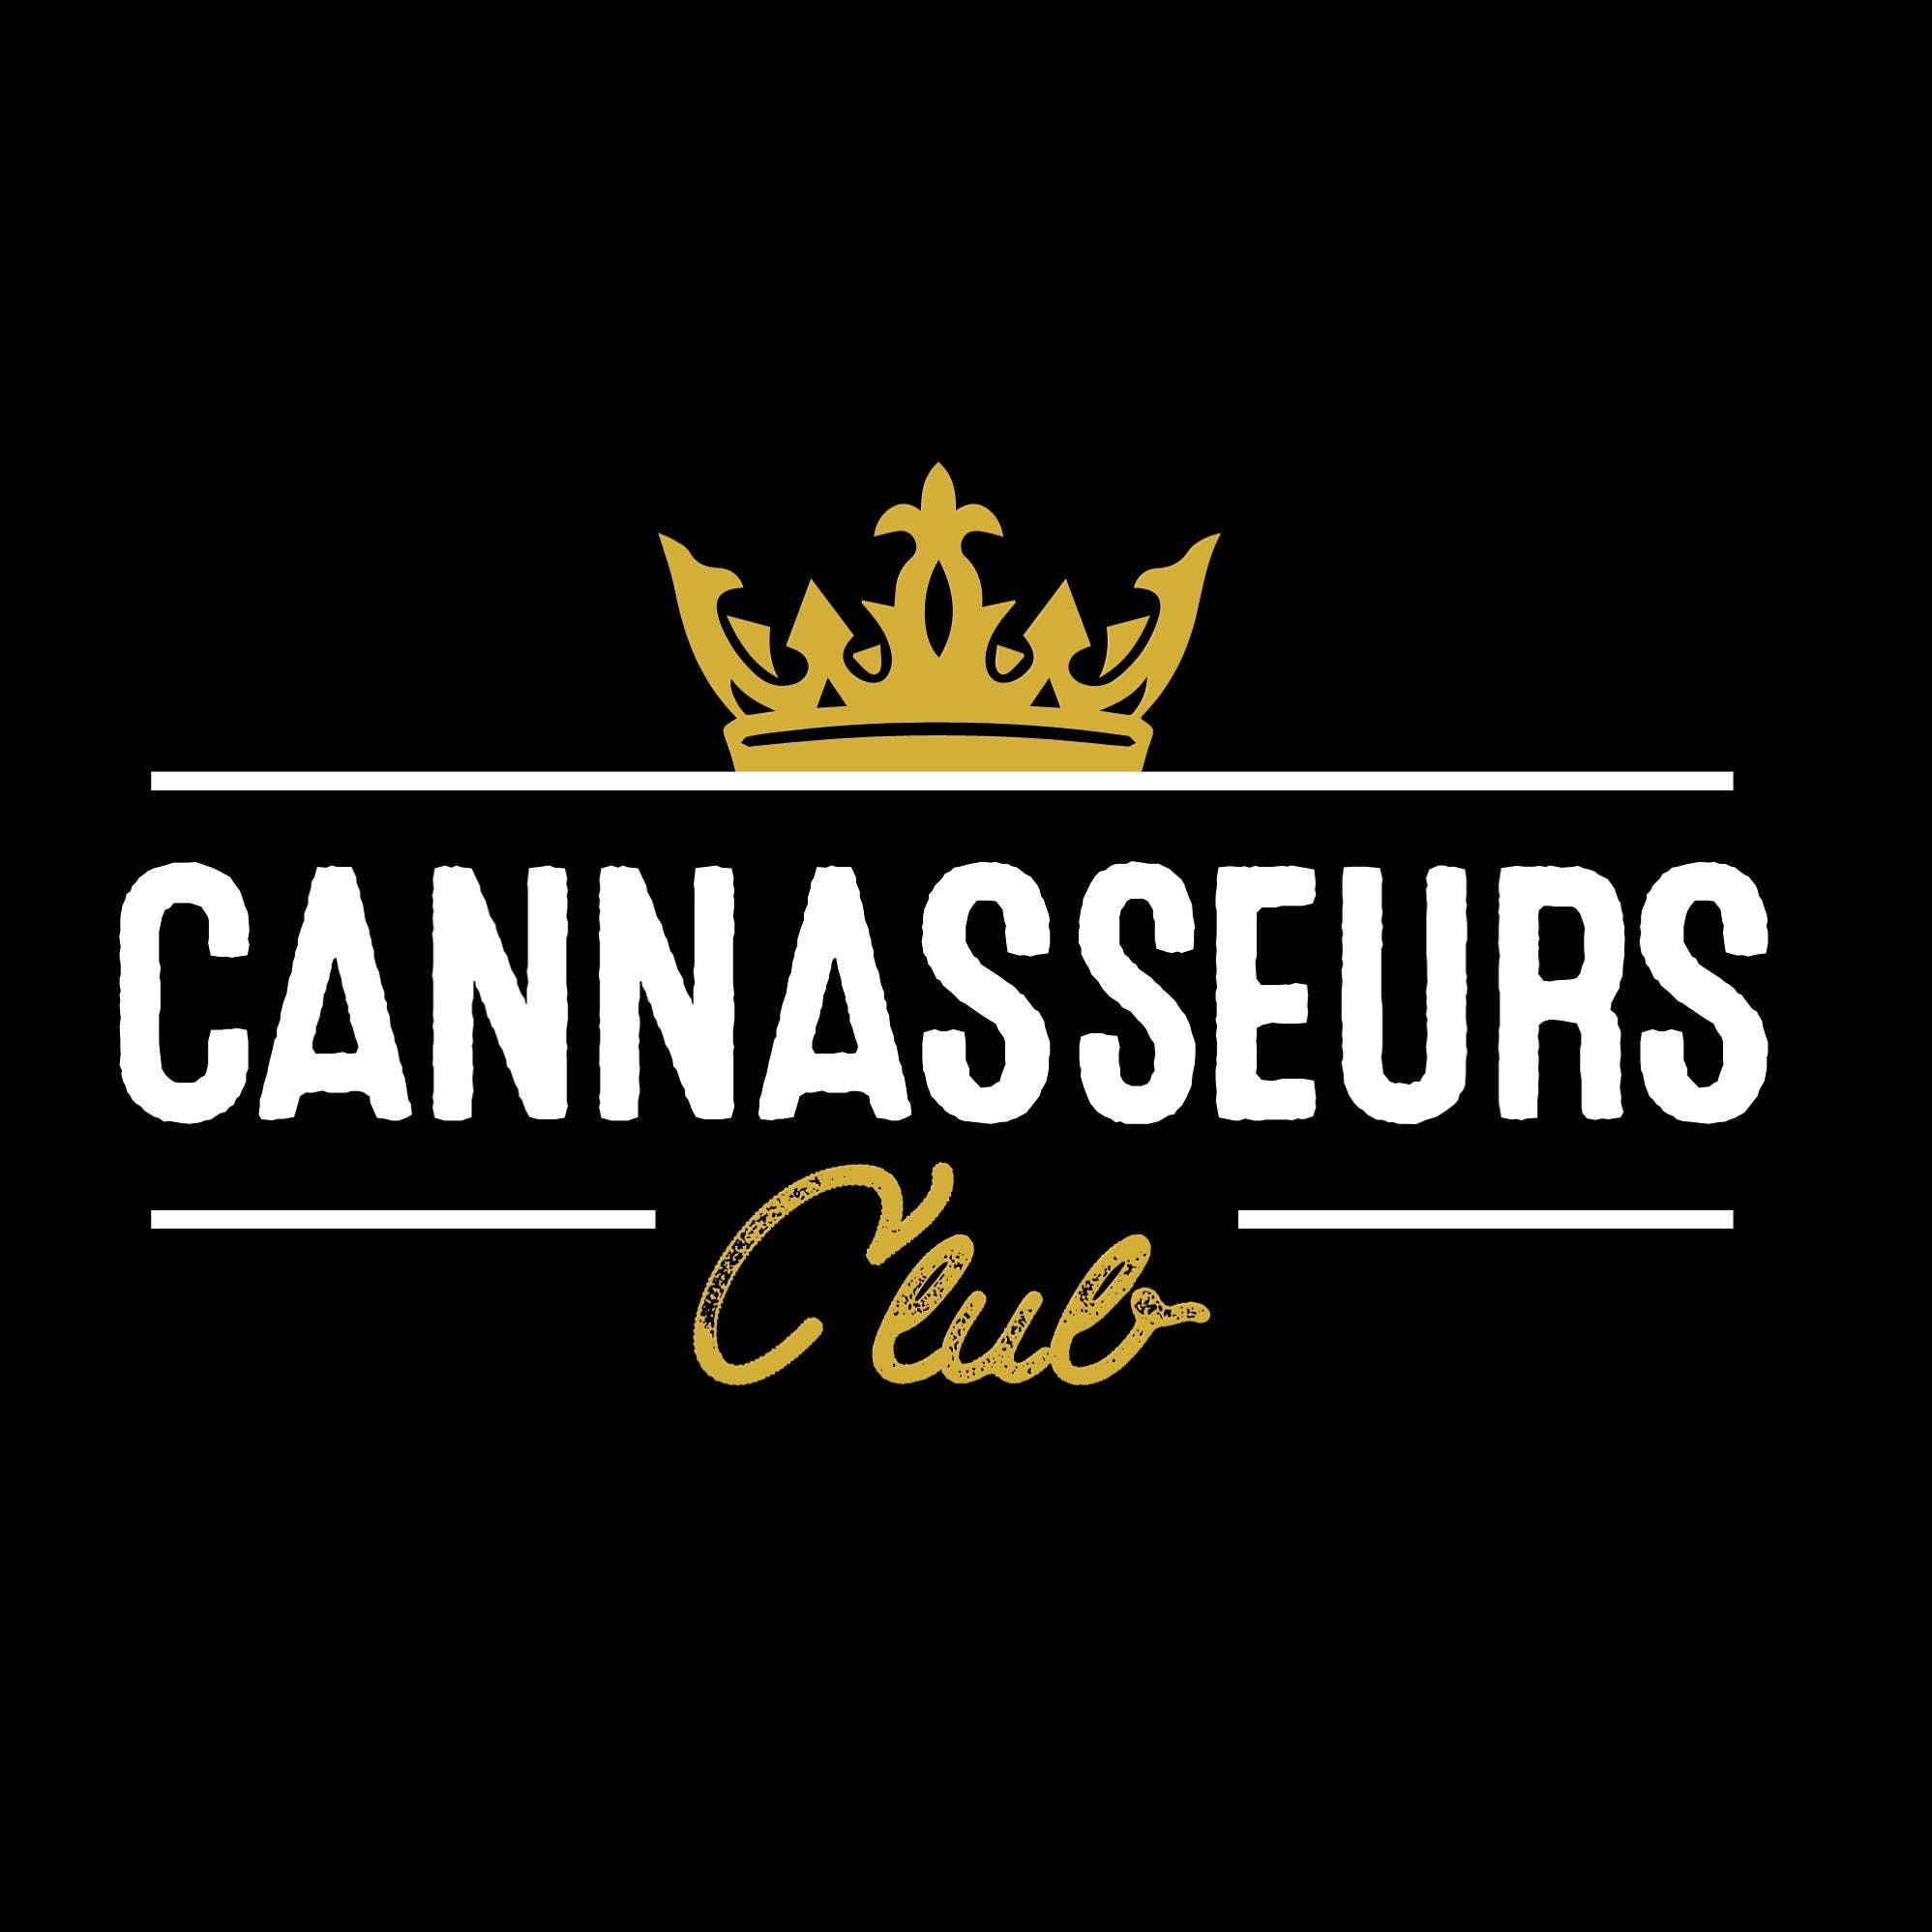 marijuana-dispensaries-cannasseurs-club-in-mission-hills-exclusive-sfv-og